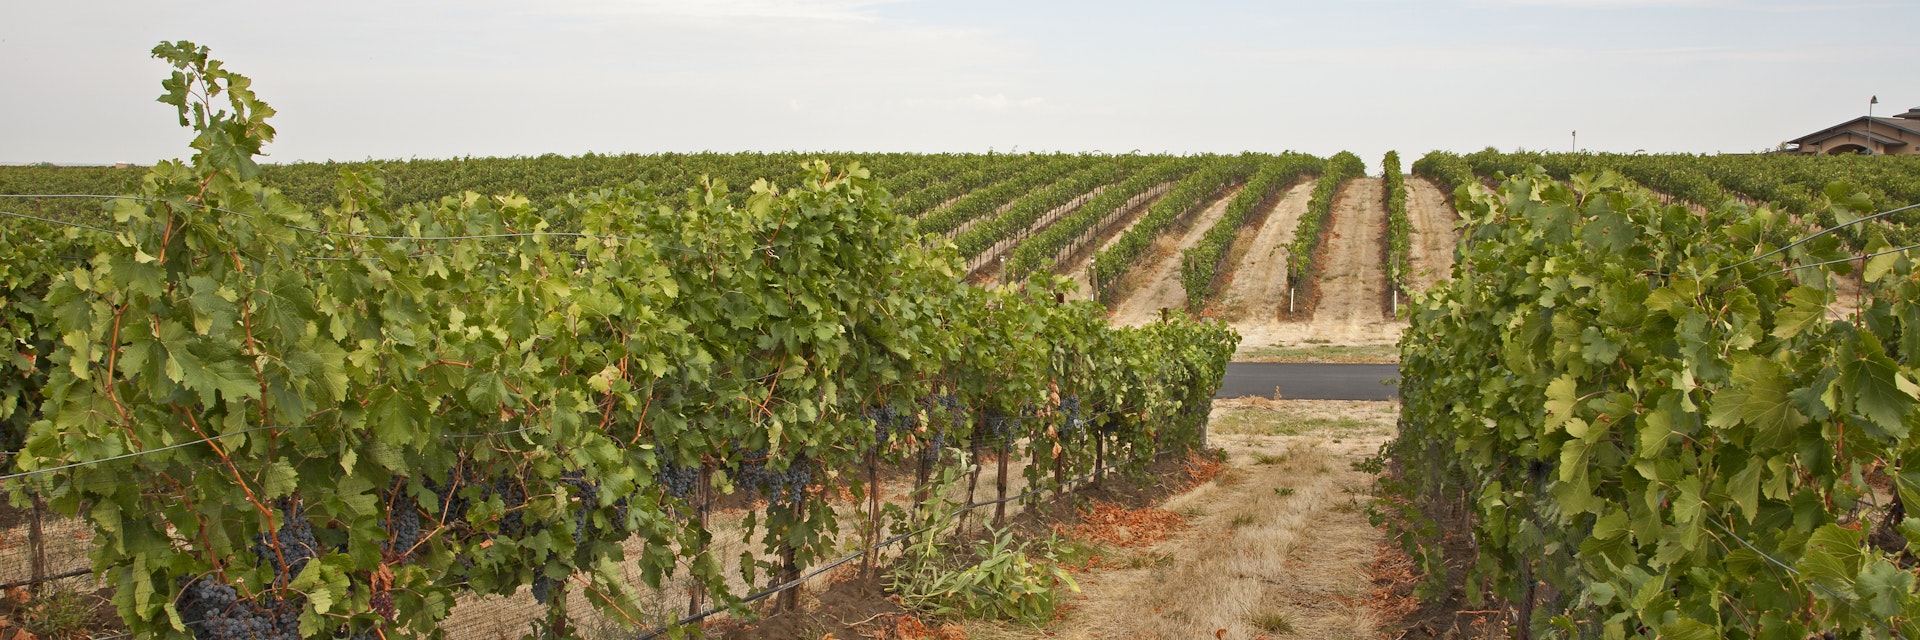 Beautiful vineyard with rows of vines of Merlot grapes on rolling hills near Walla Walla, Washington.